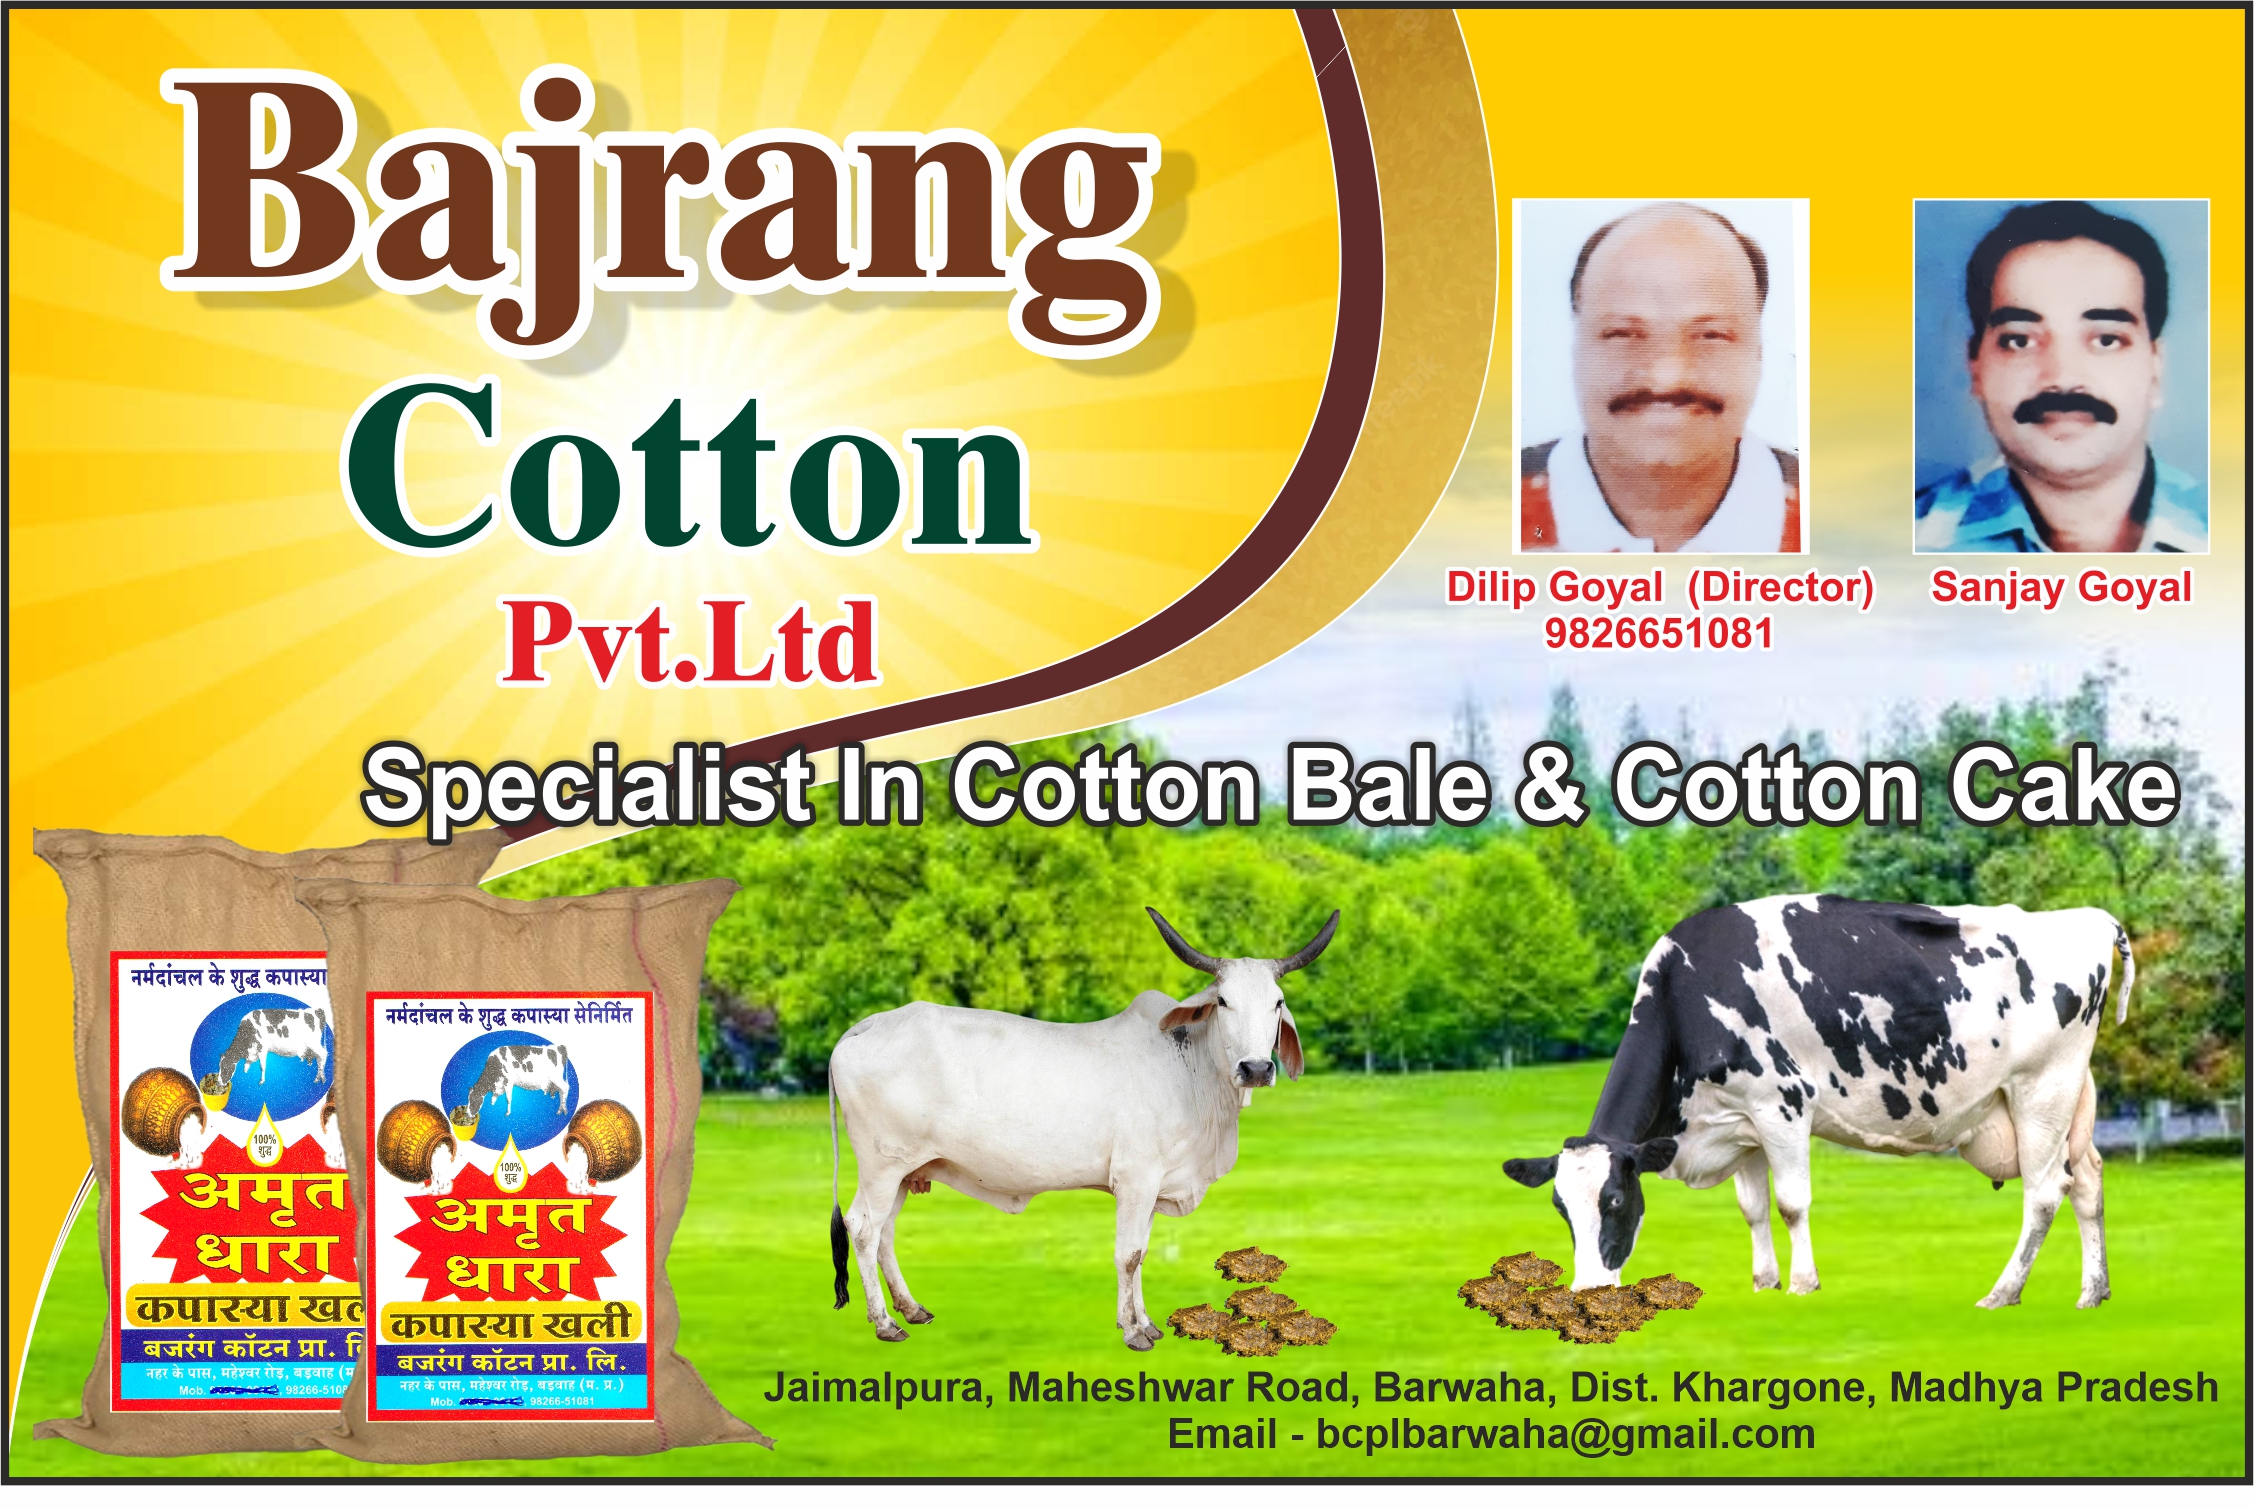 Bajrang Cotton Pvt. Ltd.